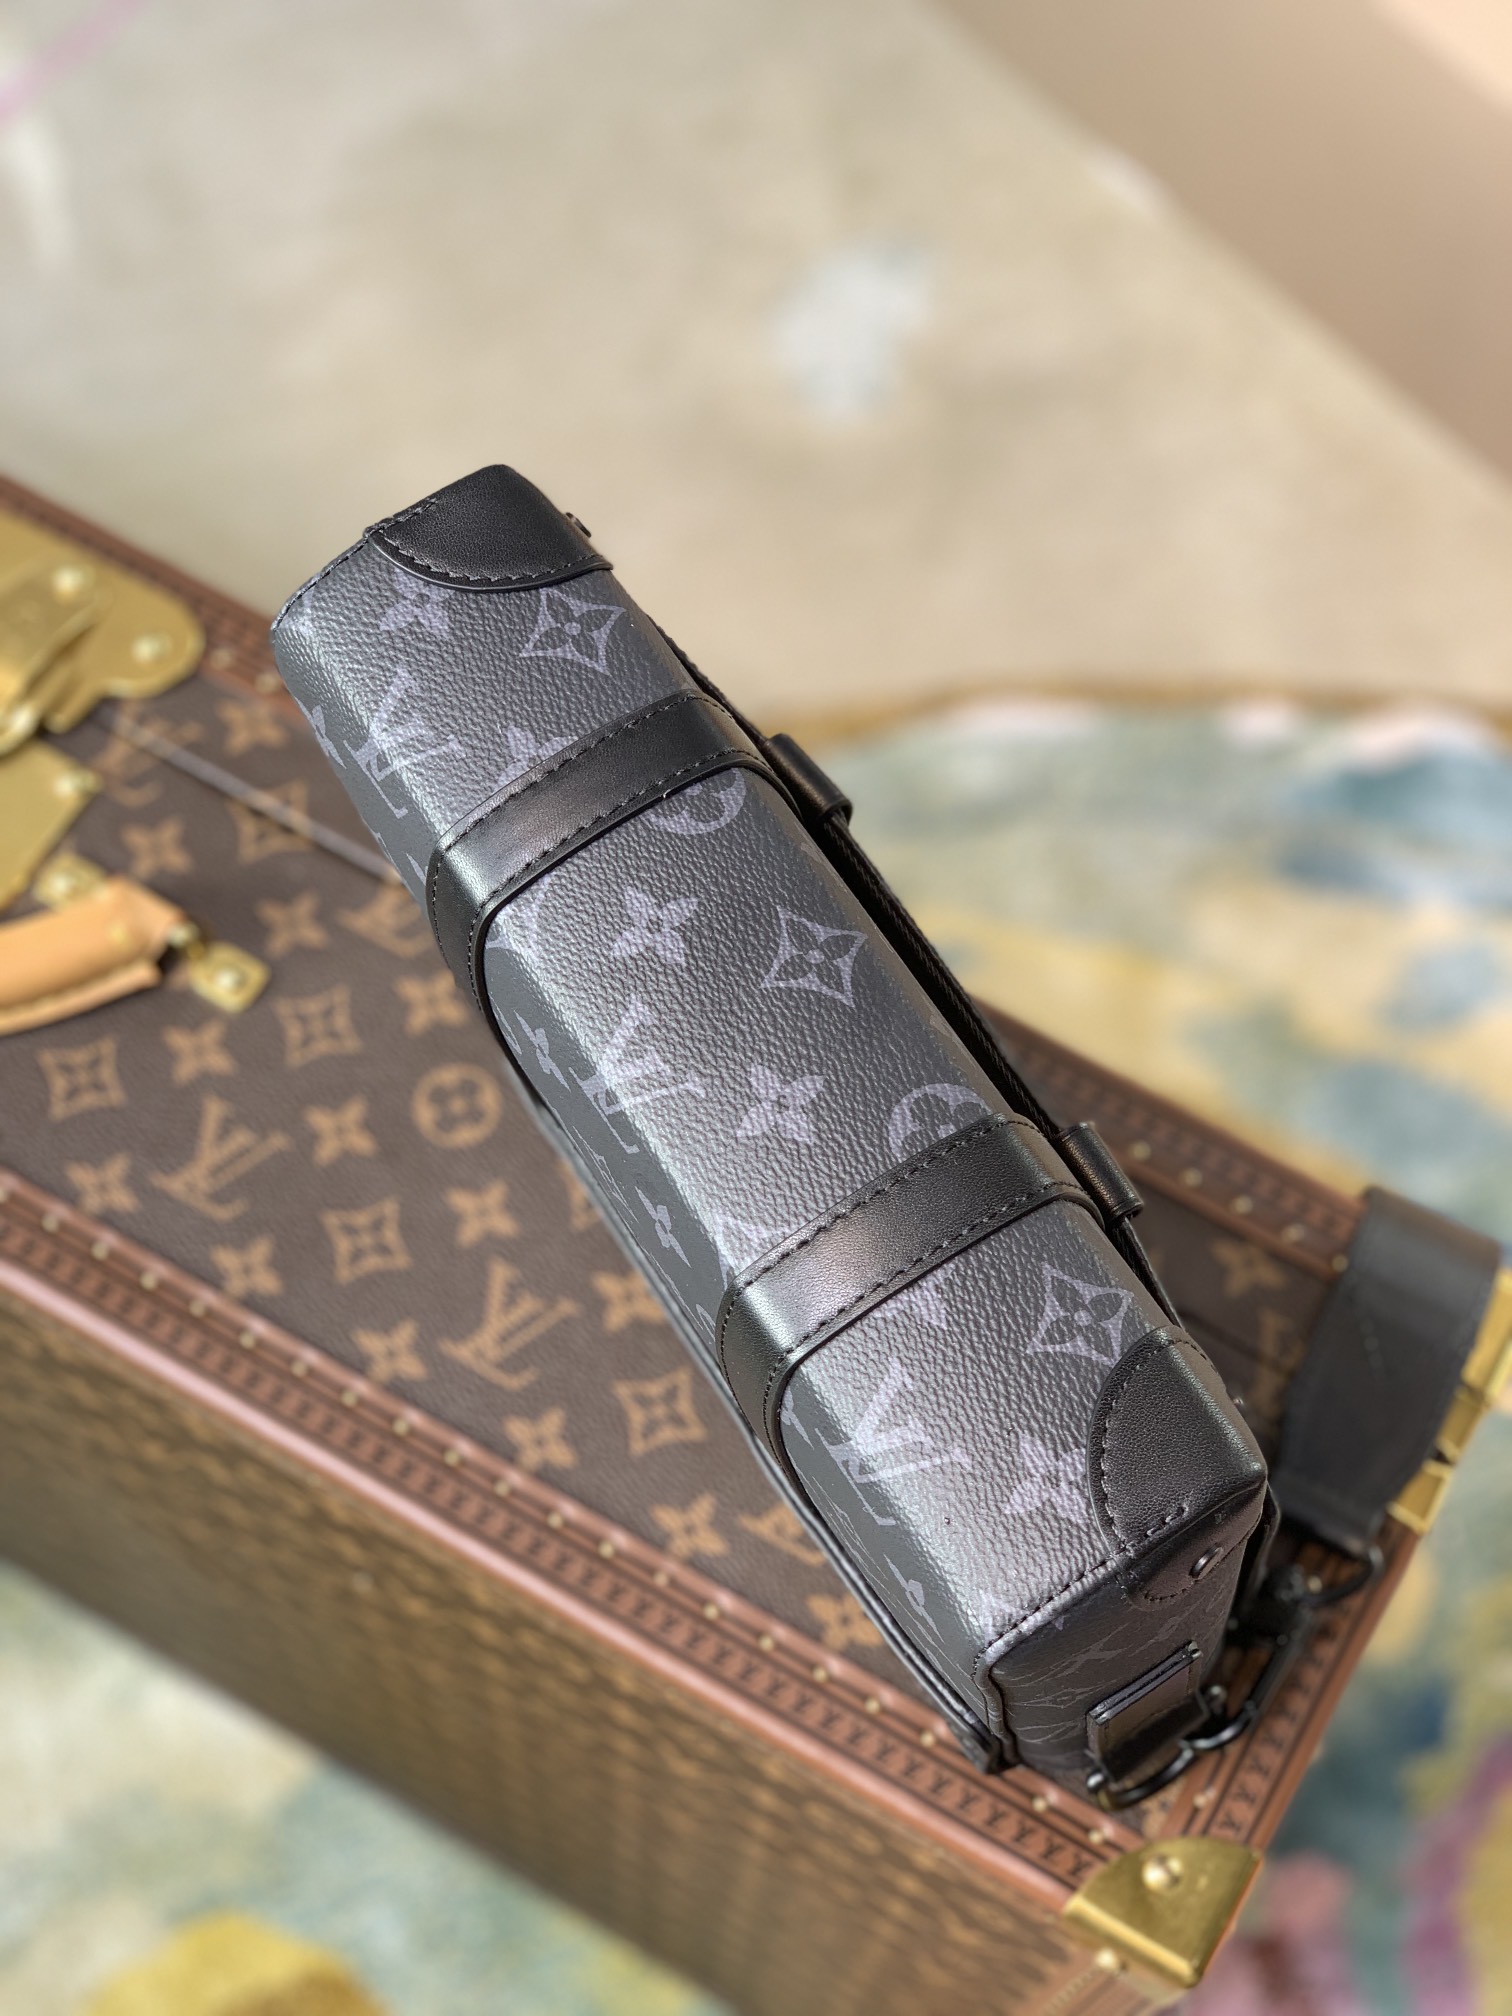 Louis Vuitton LV Trunk Messenger bag M45727黑色名媛网